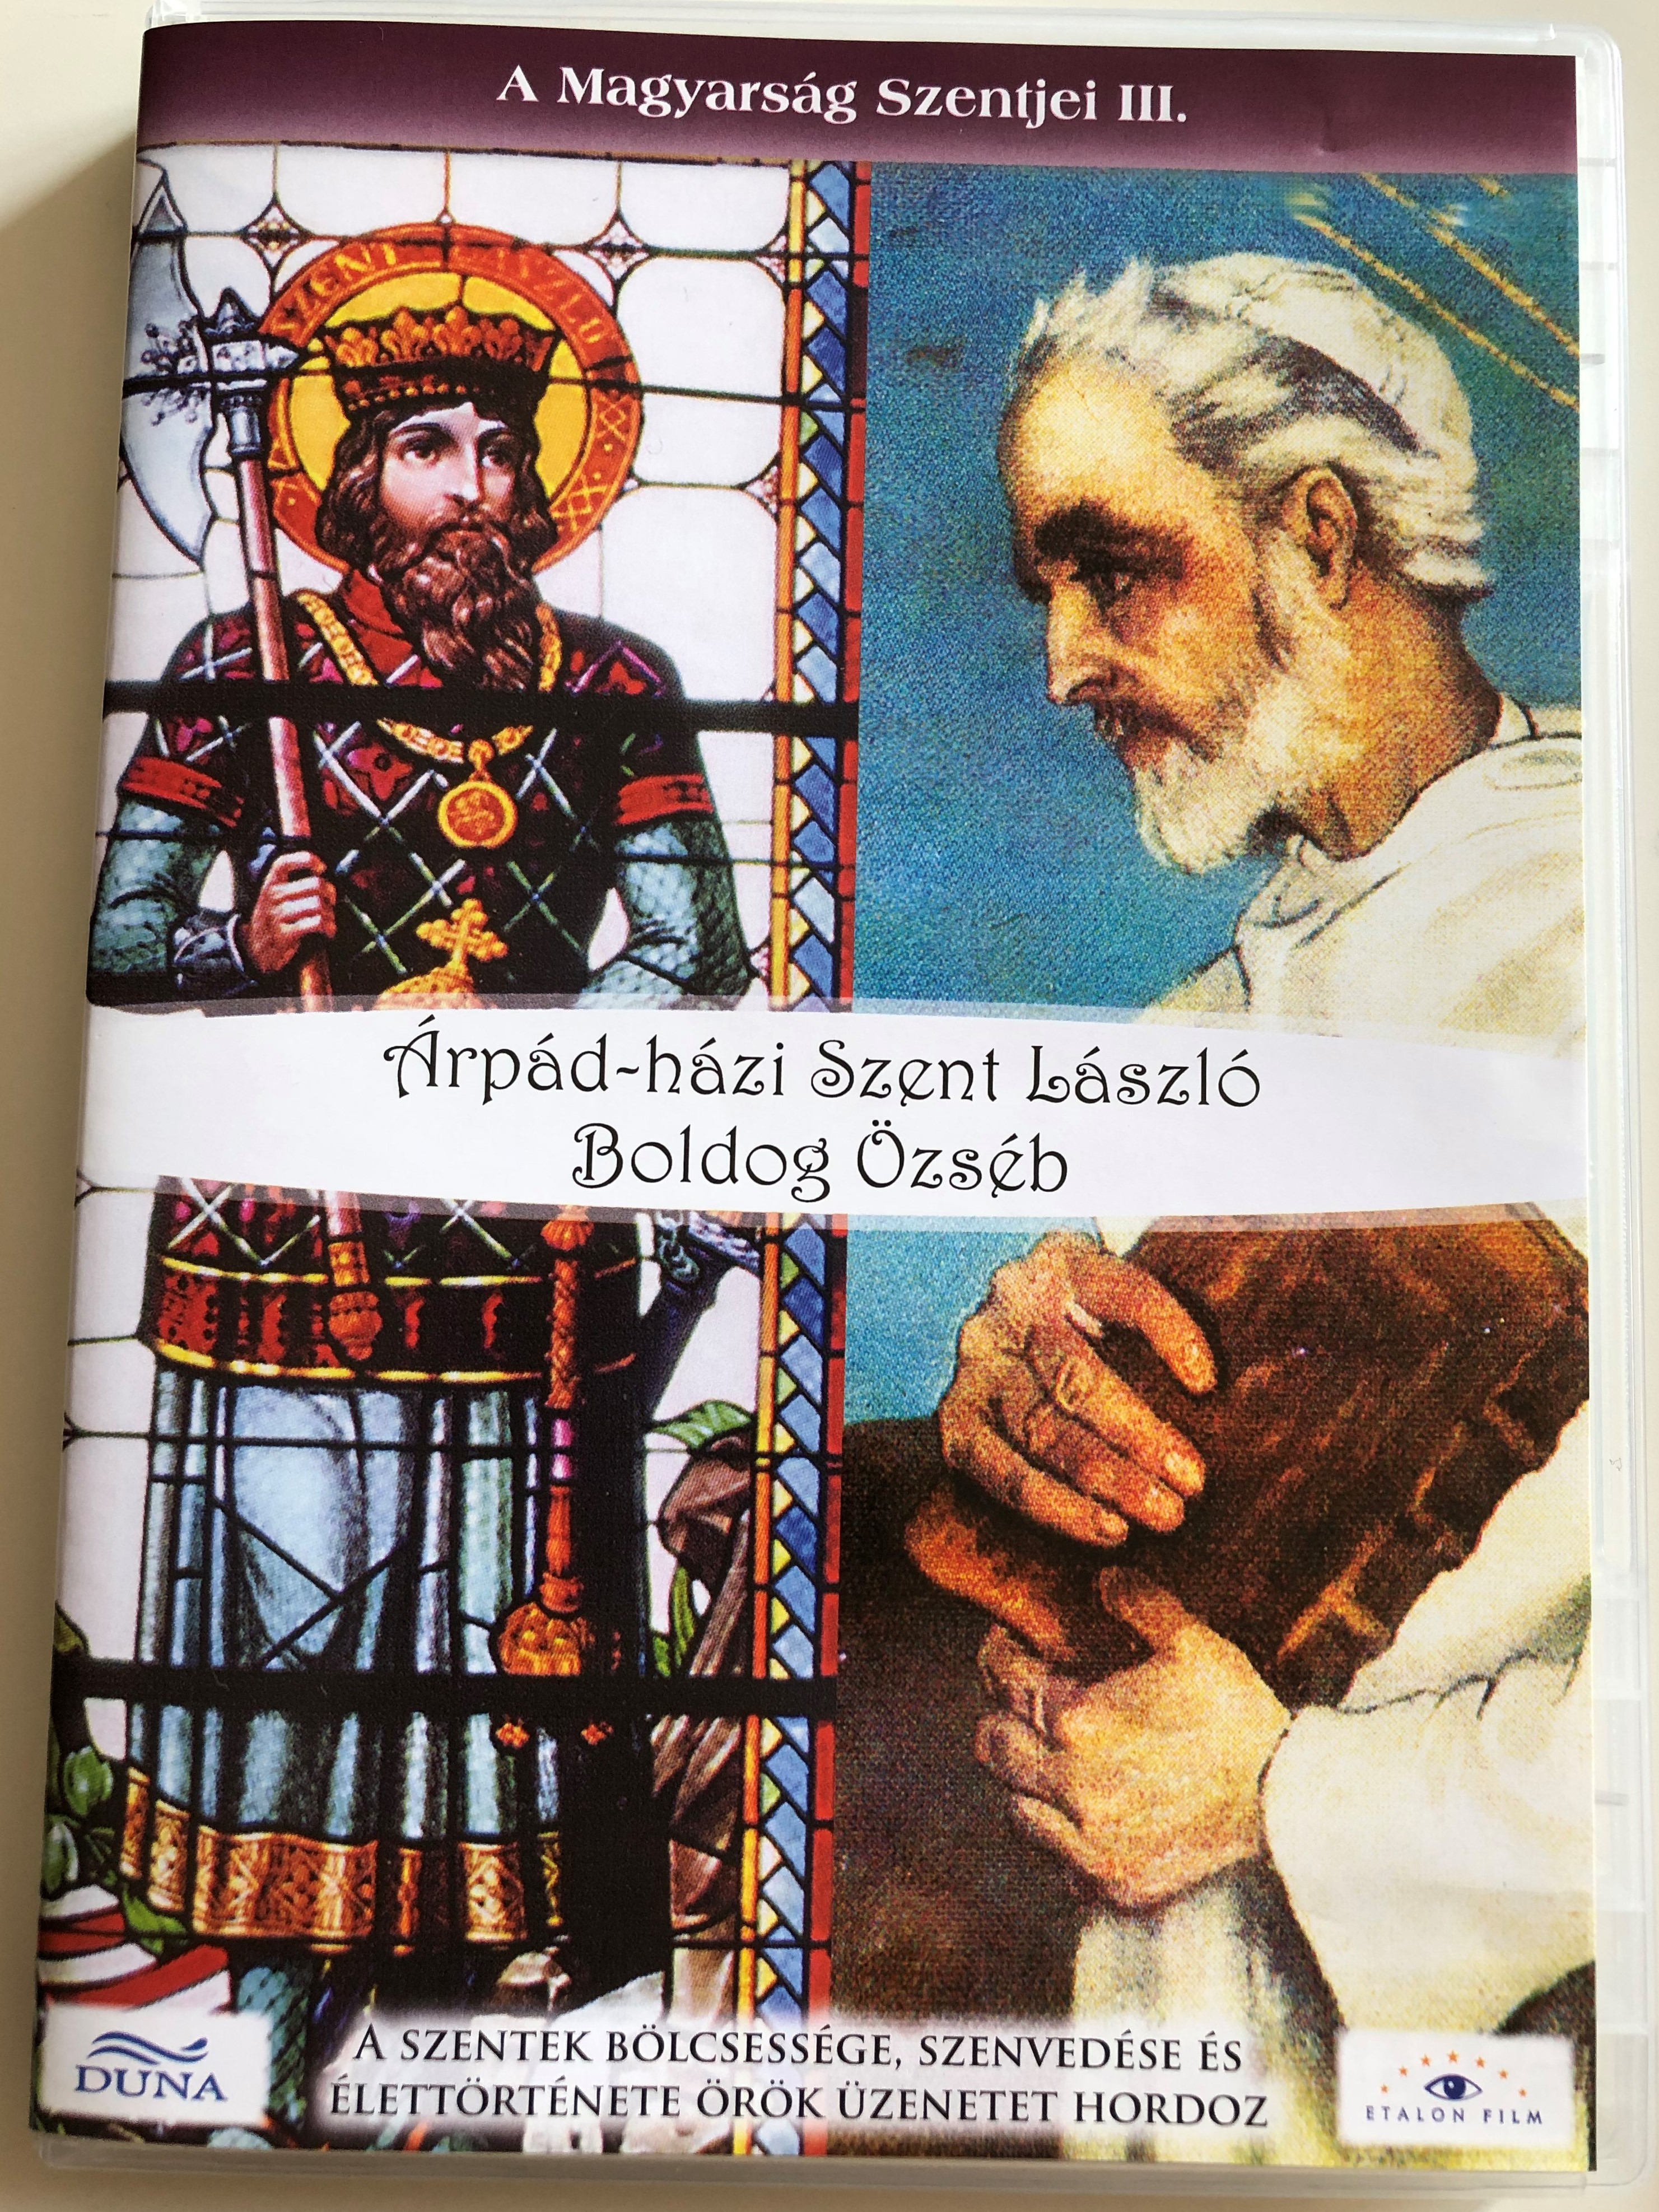 a-magyars-g-szentjei-iii-dvd-2008-the-hungarian-saints-documentary-about-hungarian-king-l-szl-and-boldog-zs-b-priest-etalon-film-1-.jpg